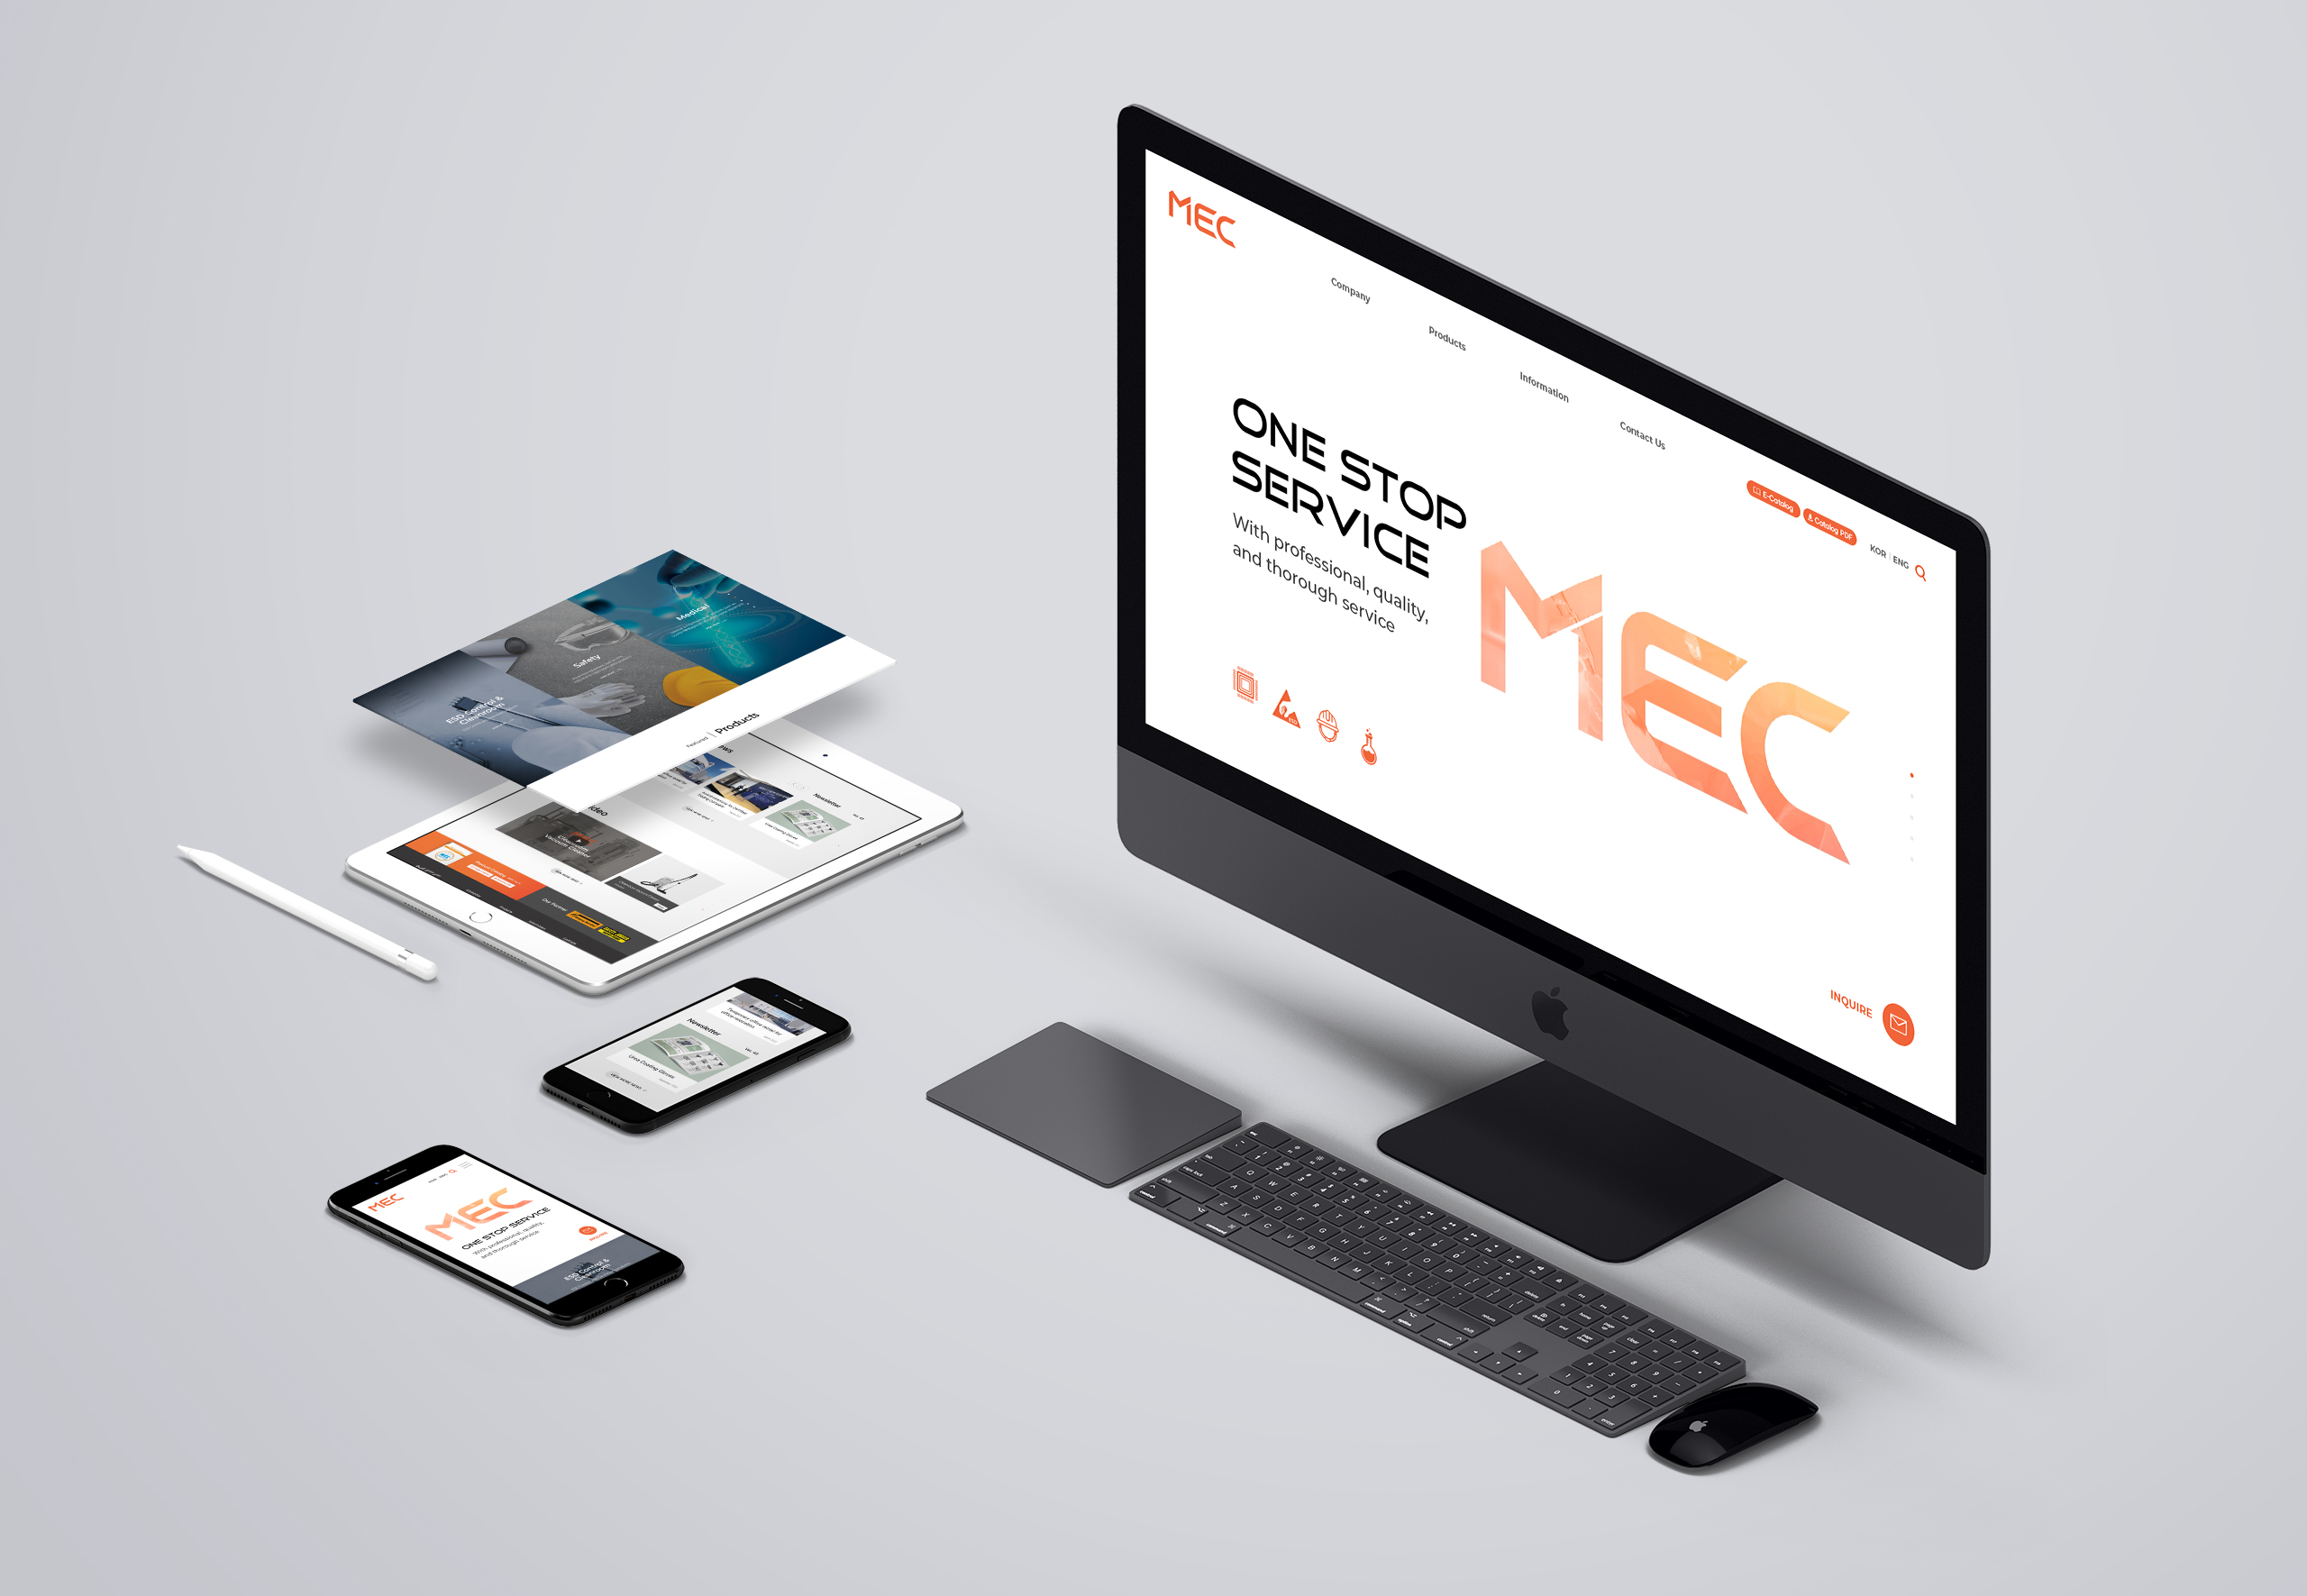 MEC homepage has been redesigned